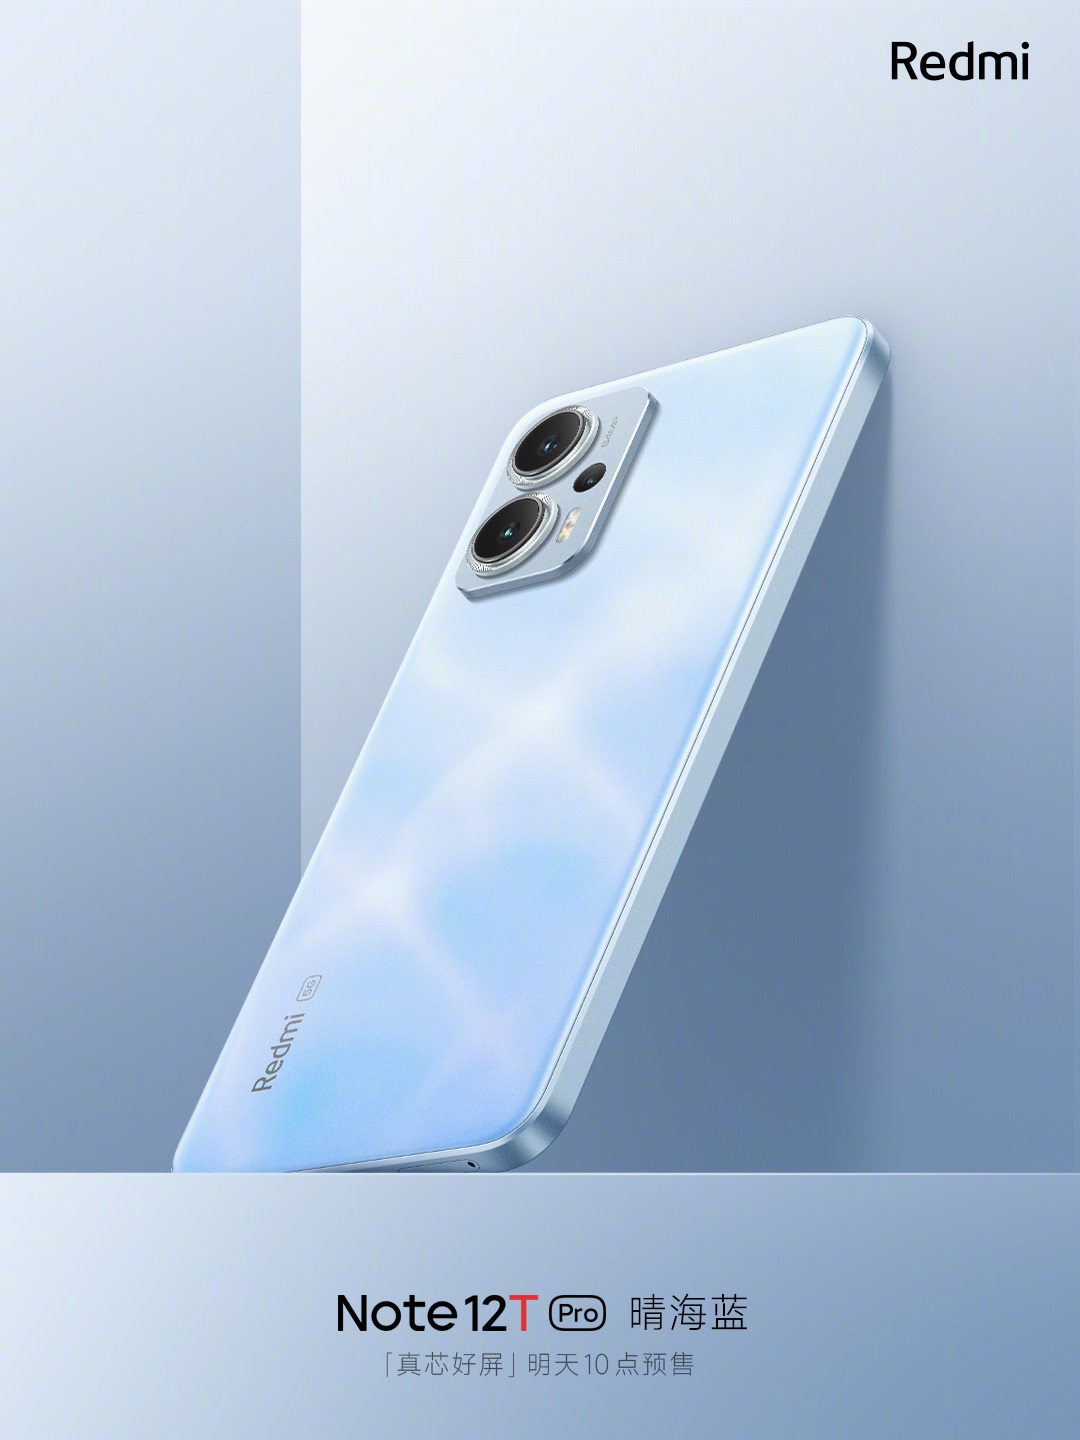 смартфон Redmi Note 12T Pro с процессором Dimensity 8200-Ultra